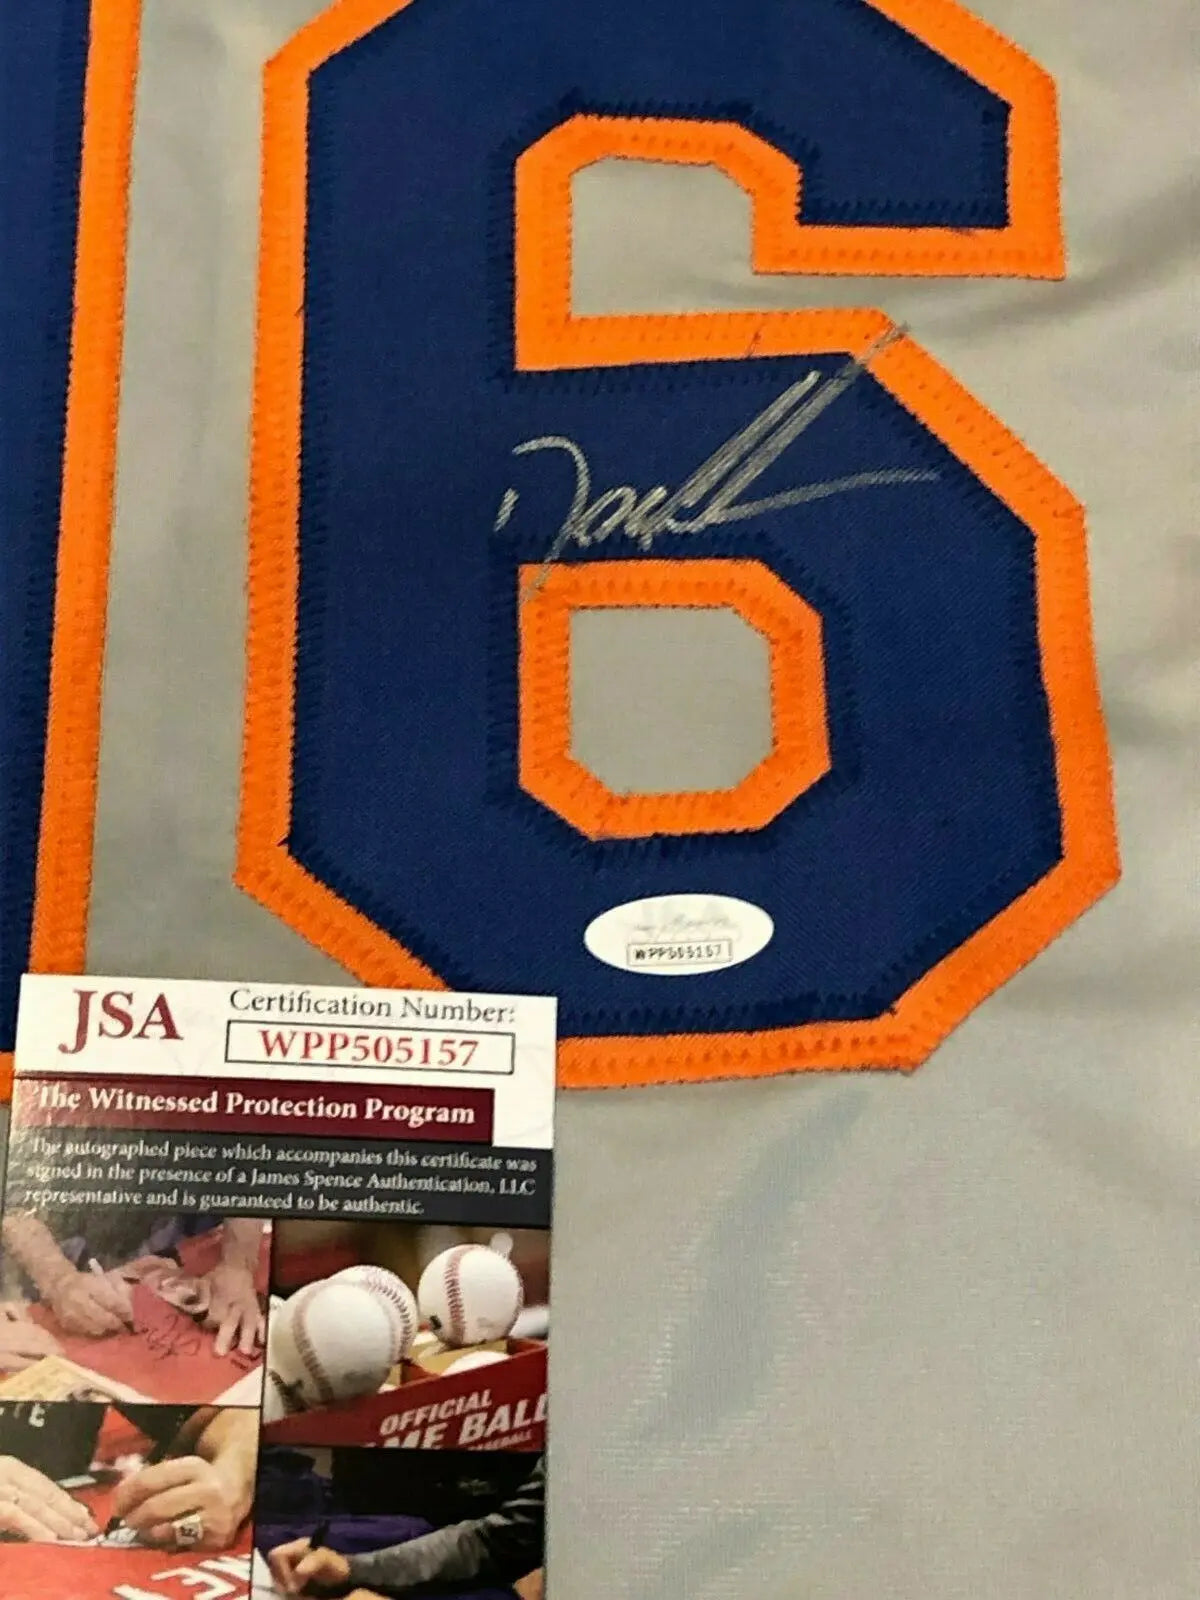 N.Y. Mets Dwight Gooden Autographed Signed Doc K Jersey Jsa Coa